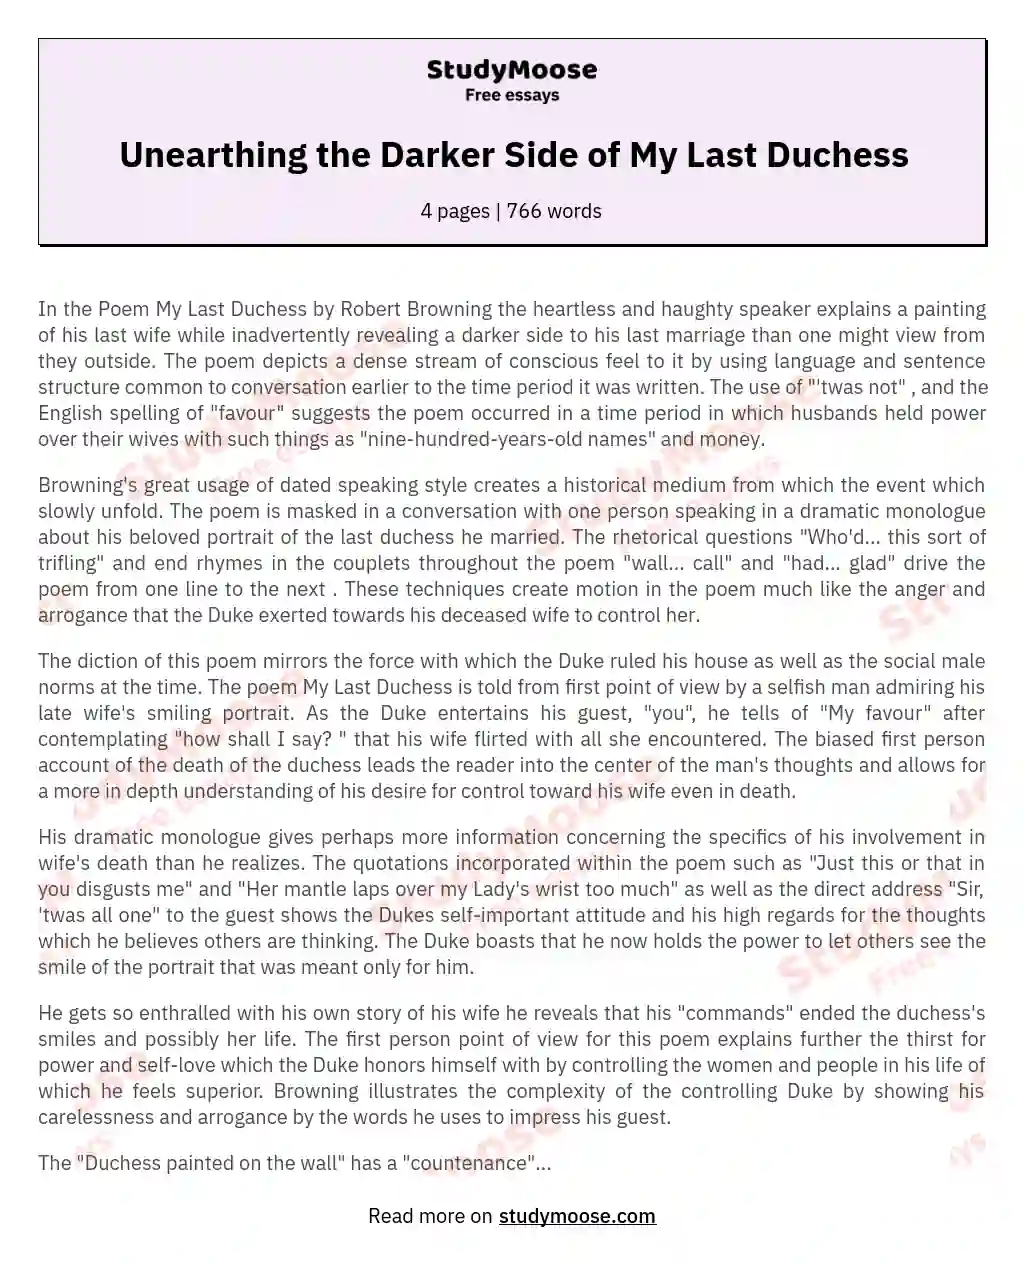 Unearthing the Darker Side of My Last Duchess essay